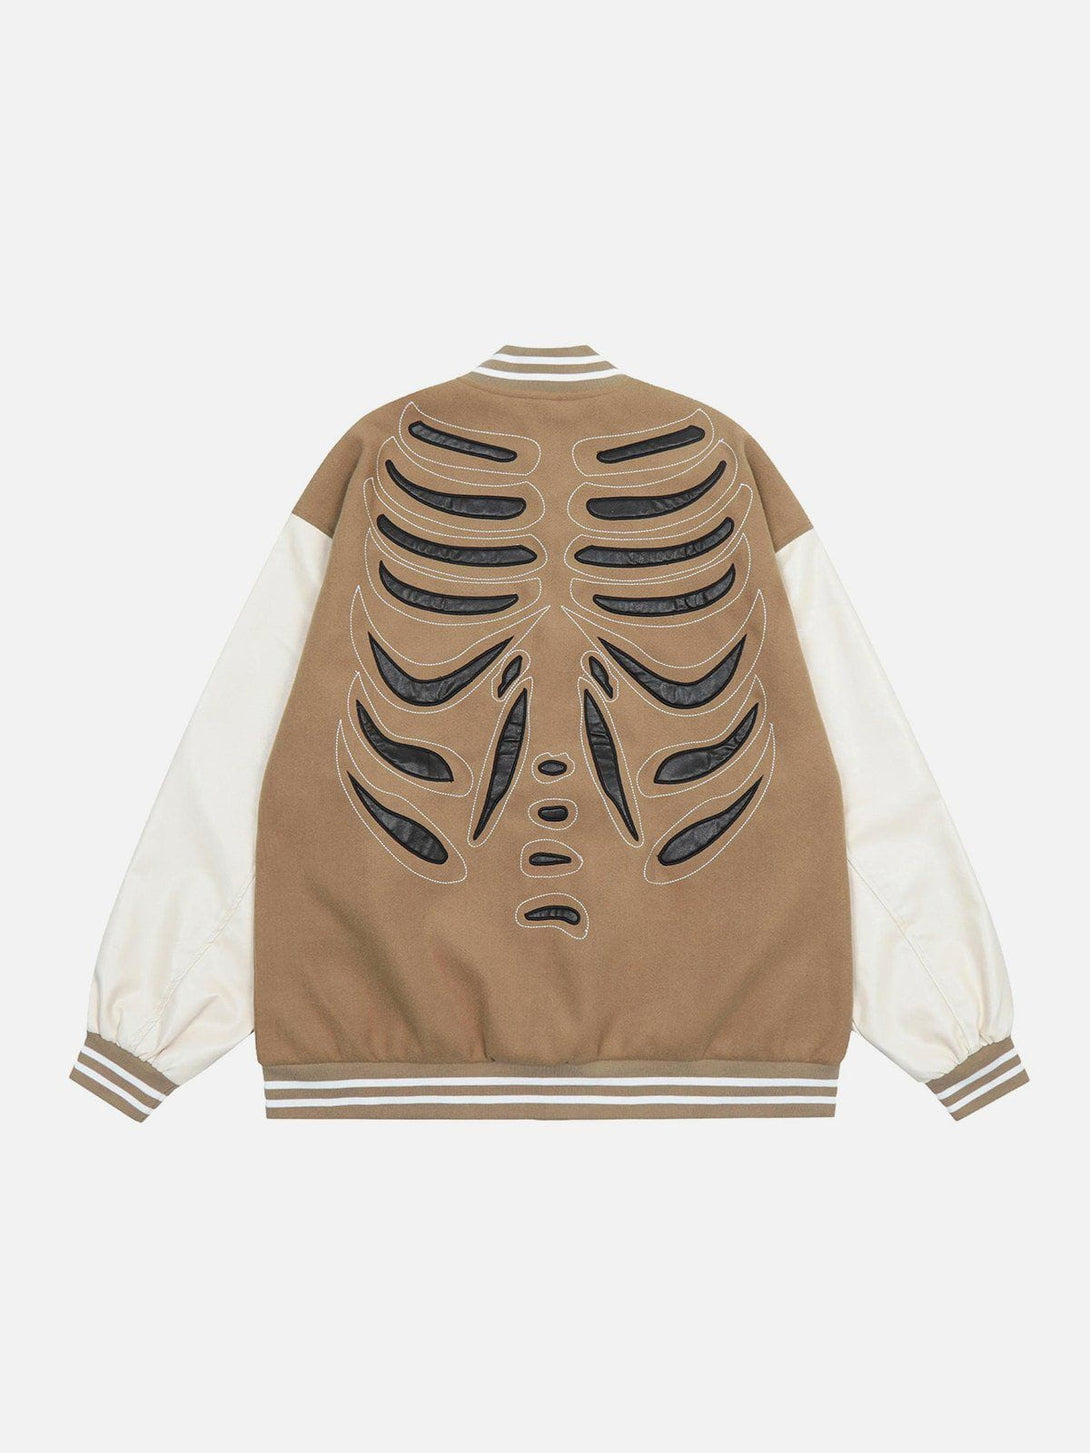 Majesda® - Skull Graphic Varsity Jacket outfit ideas, streetwear fashion - majesda.com